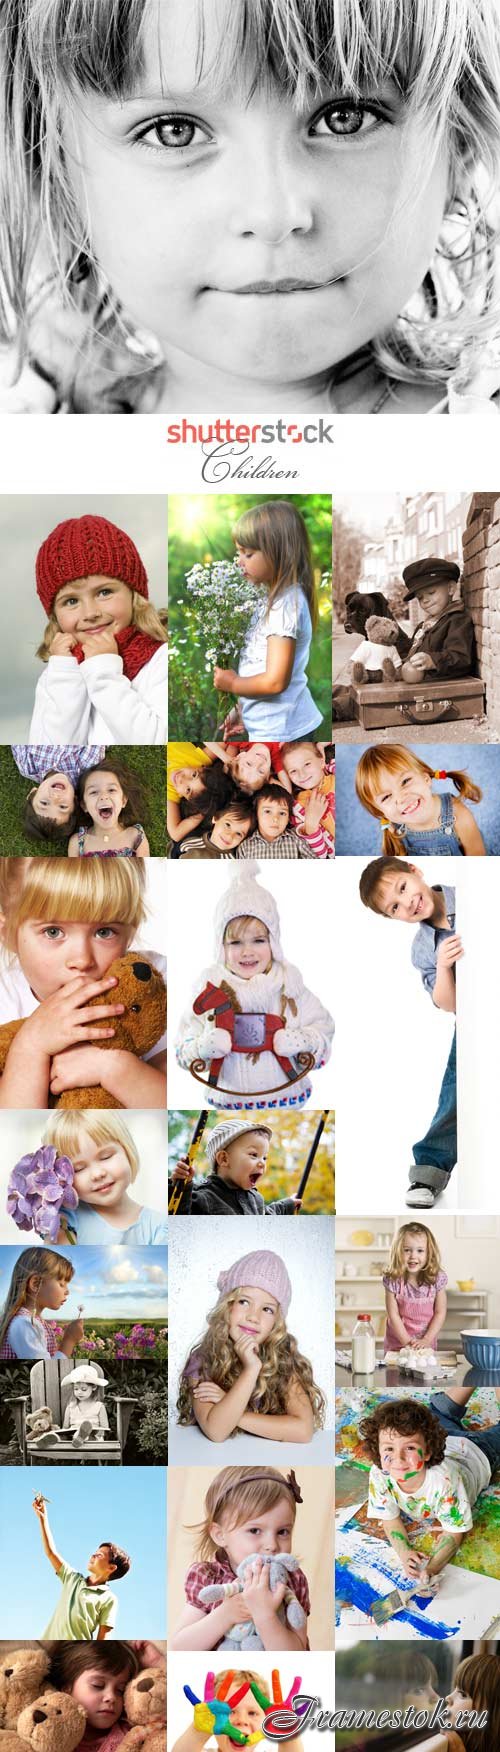 Children - stock photos